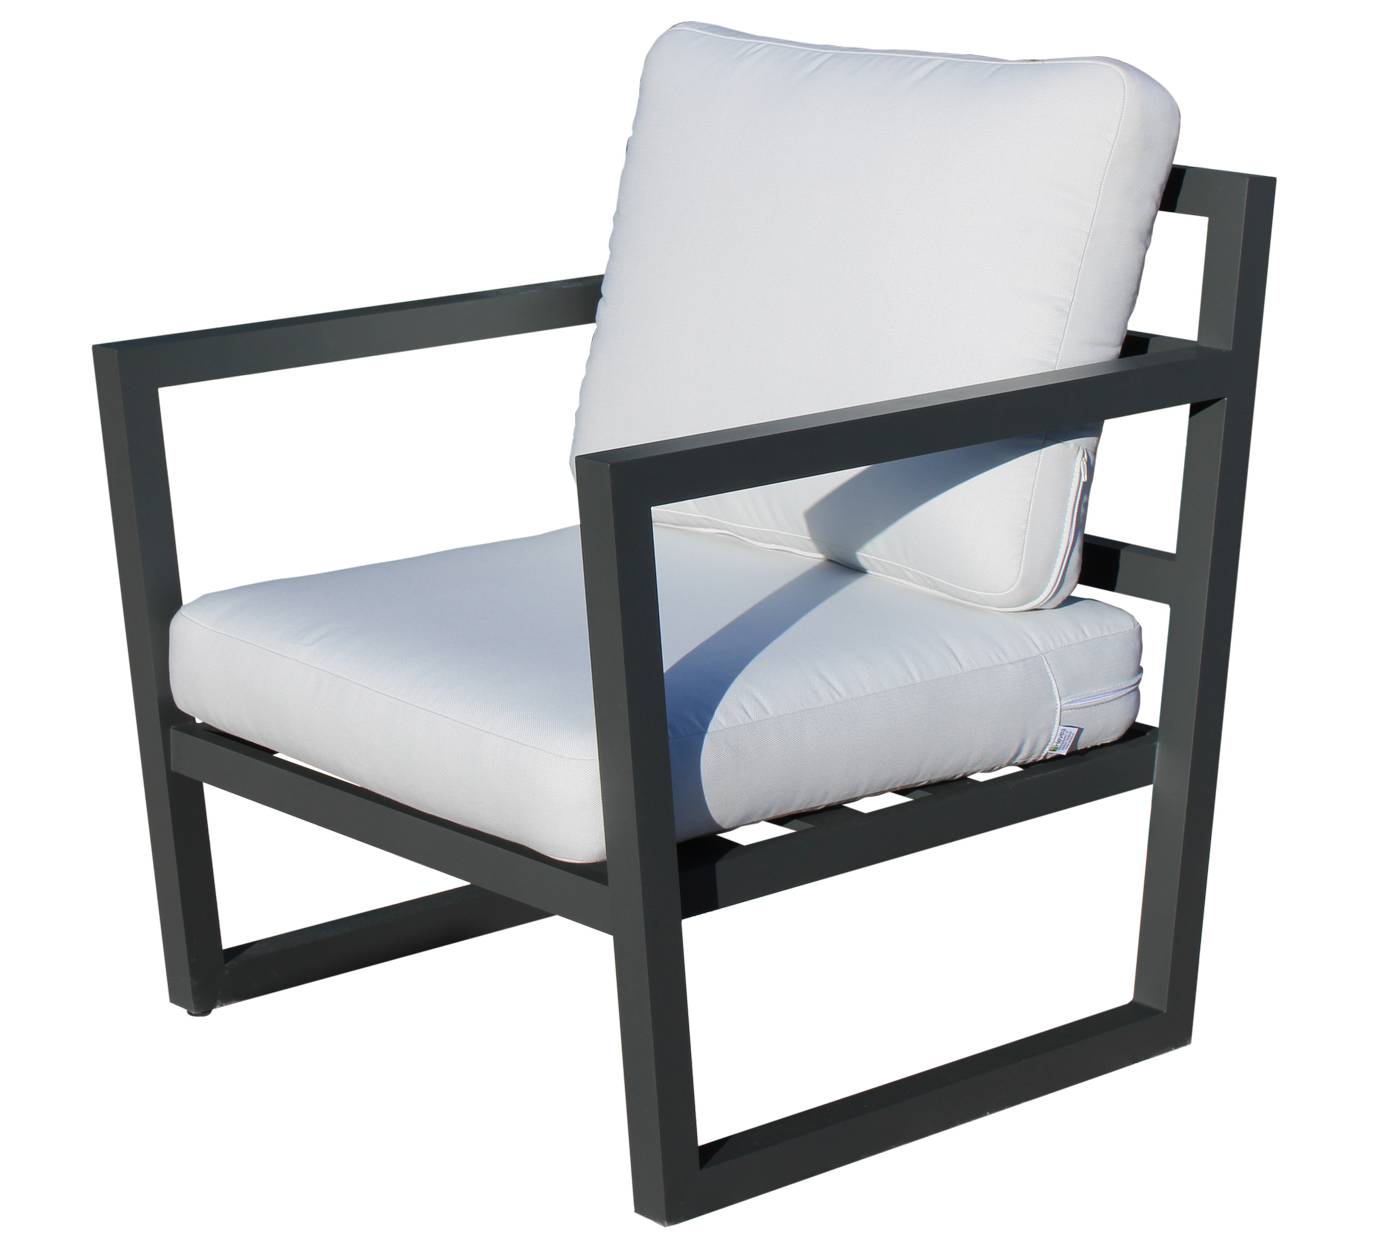 Set Aluminio Piona-8 - Conjunto de aluminio para exterior: sofá 3 plazas + 2 sillones + mesa de centro. Disponible en cinco colores diferentes.